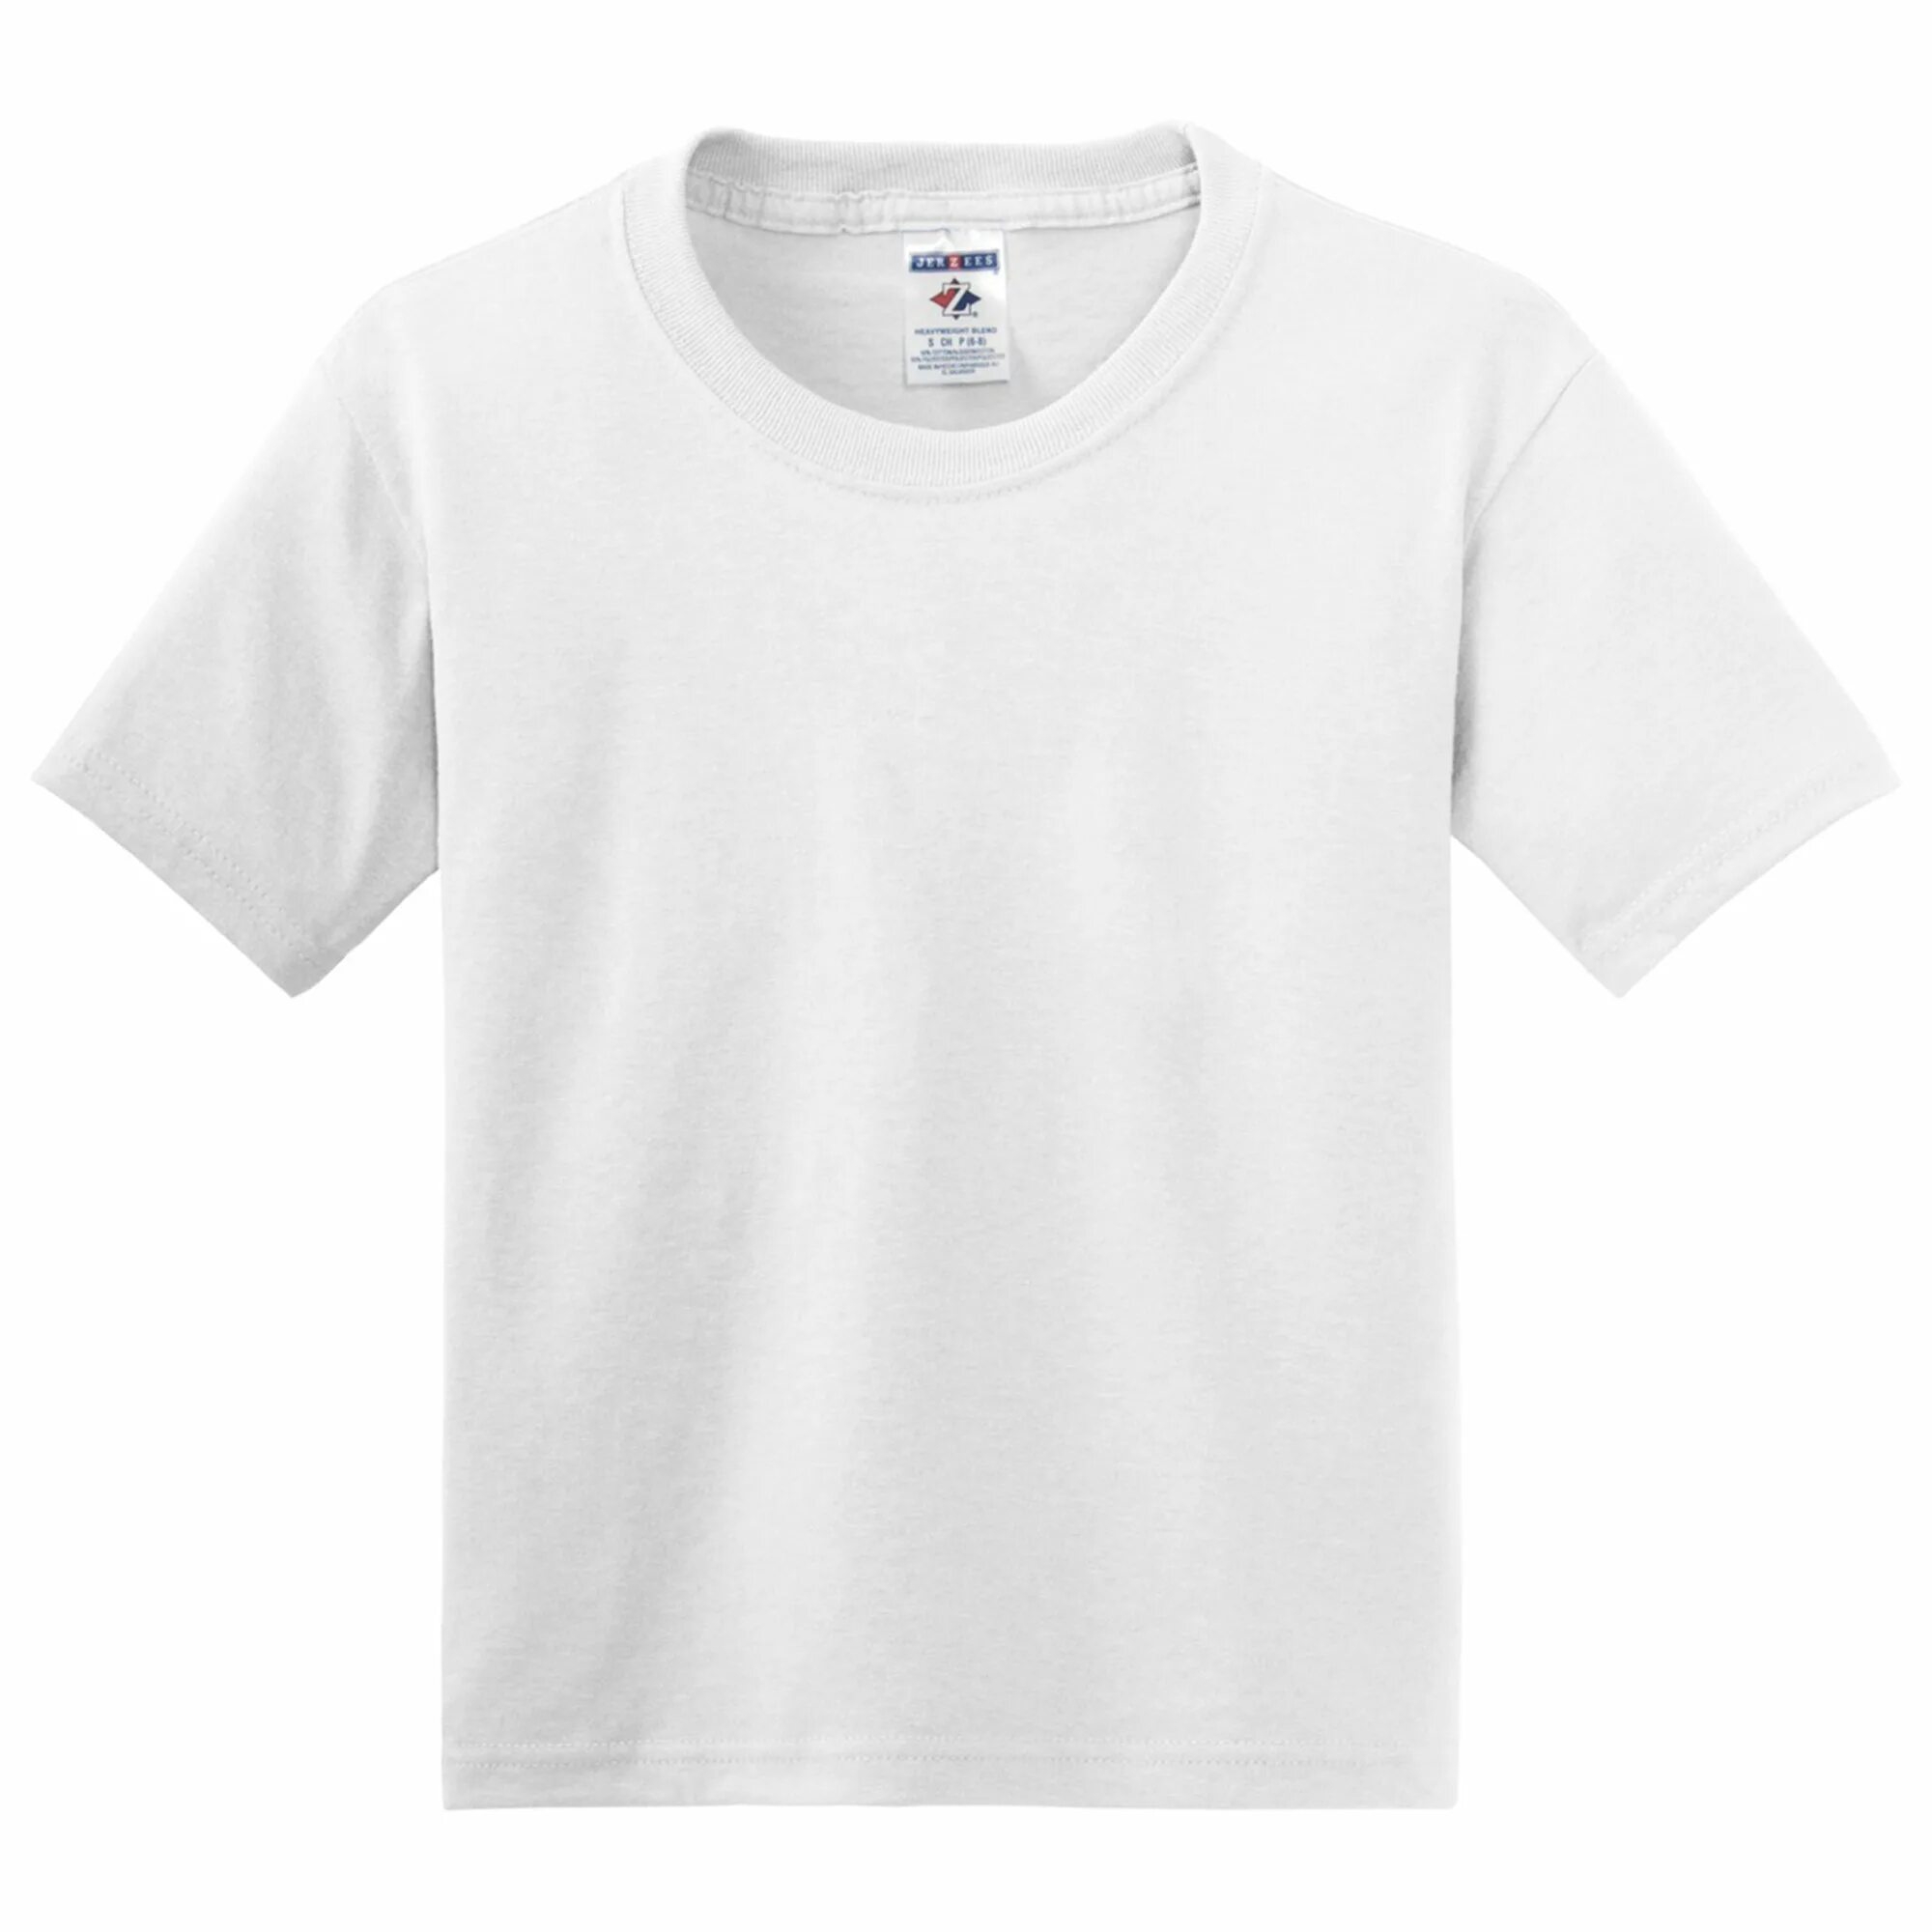 Aen,jkrf пшвфт Ргььук белая. Gildan Ultra Cotton футболки. Gildan Hammer футболки. Хлопчатобумажная футболка.